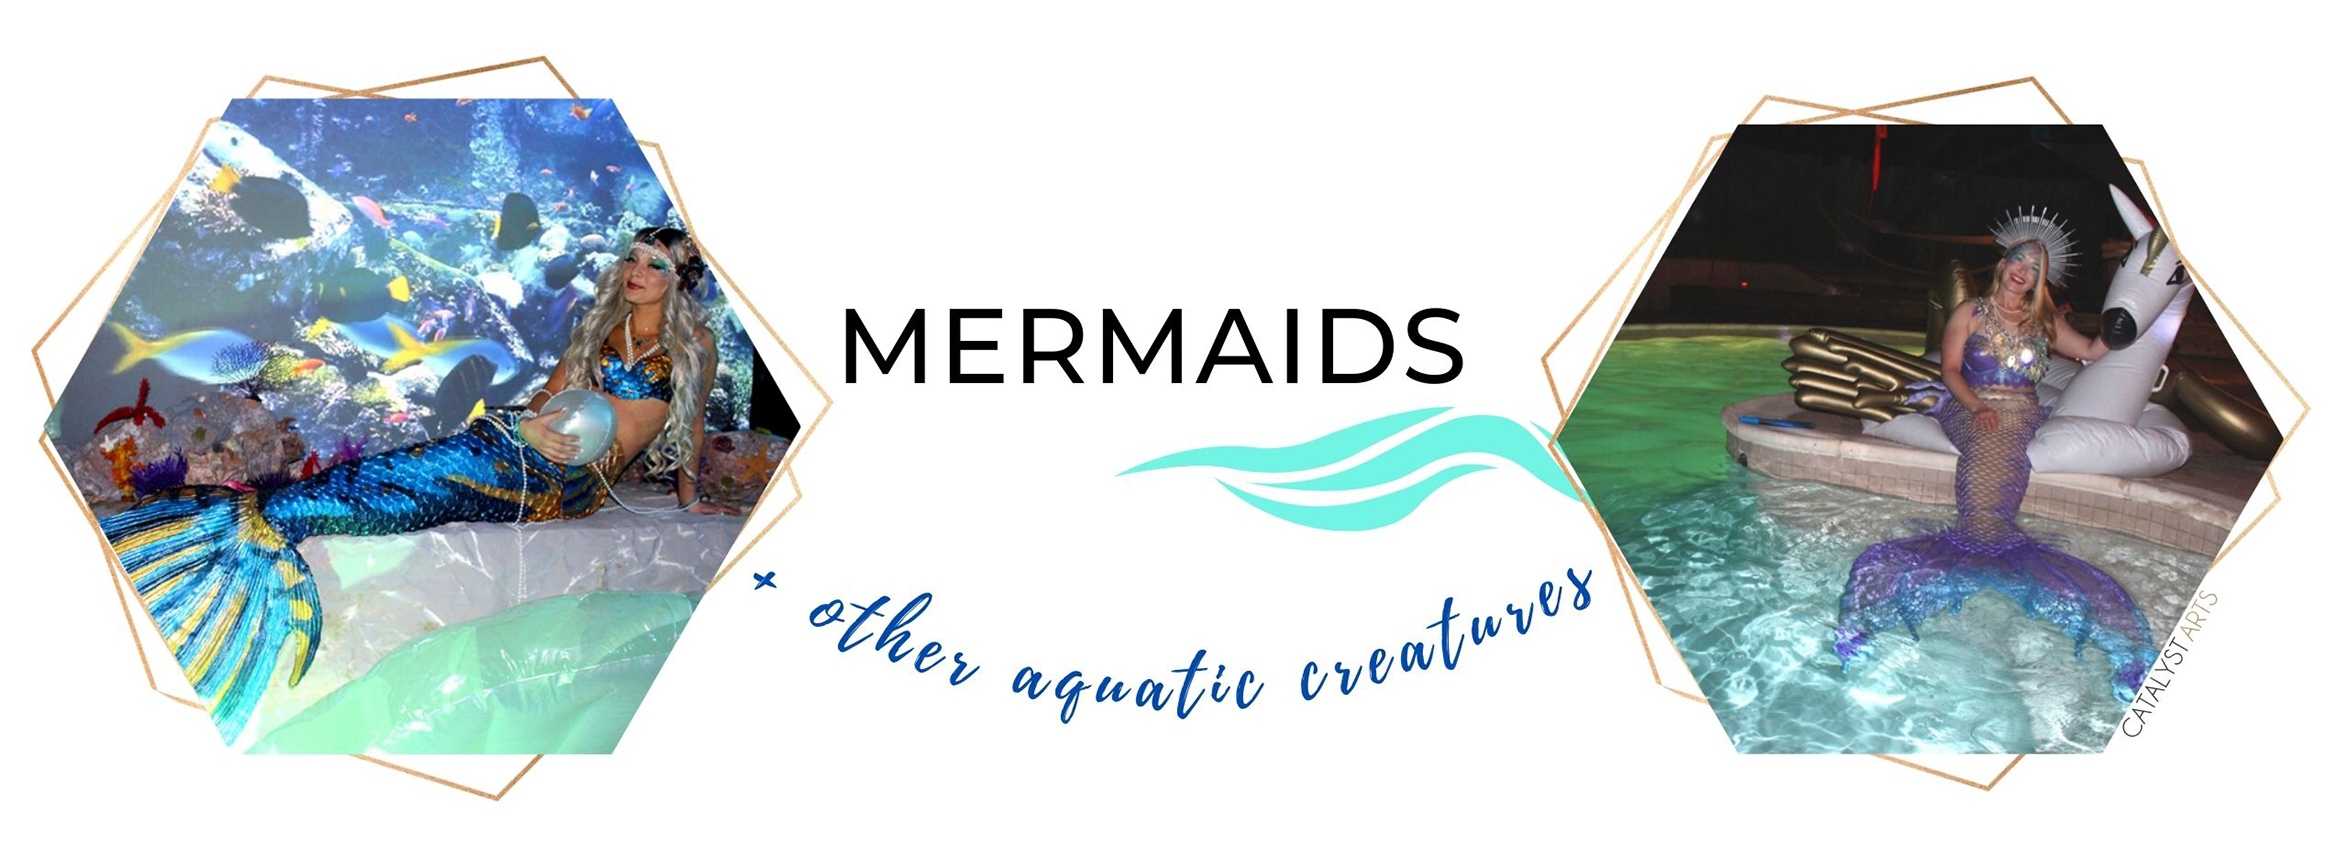 Mermaids & Swimming Mermaids in California by Catalyst Arts